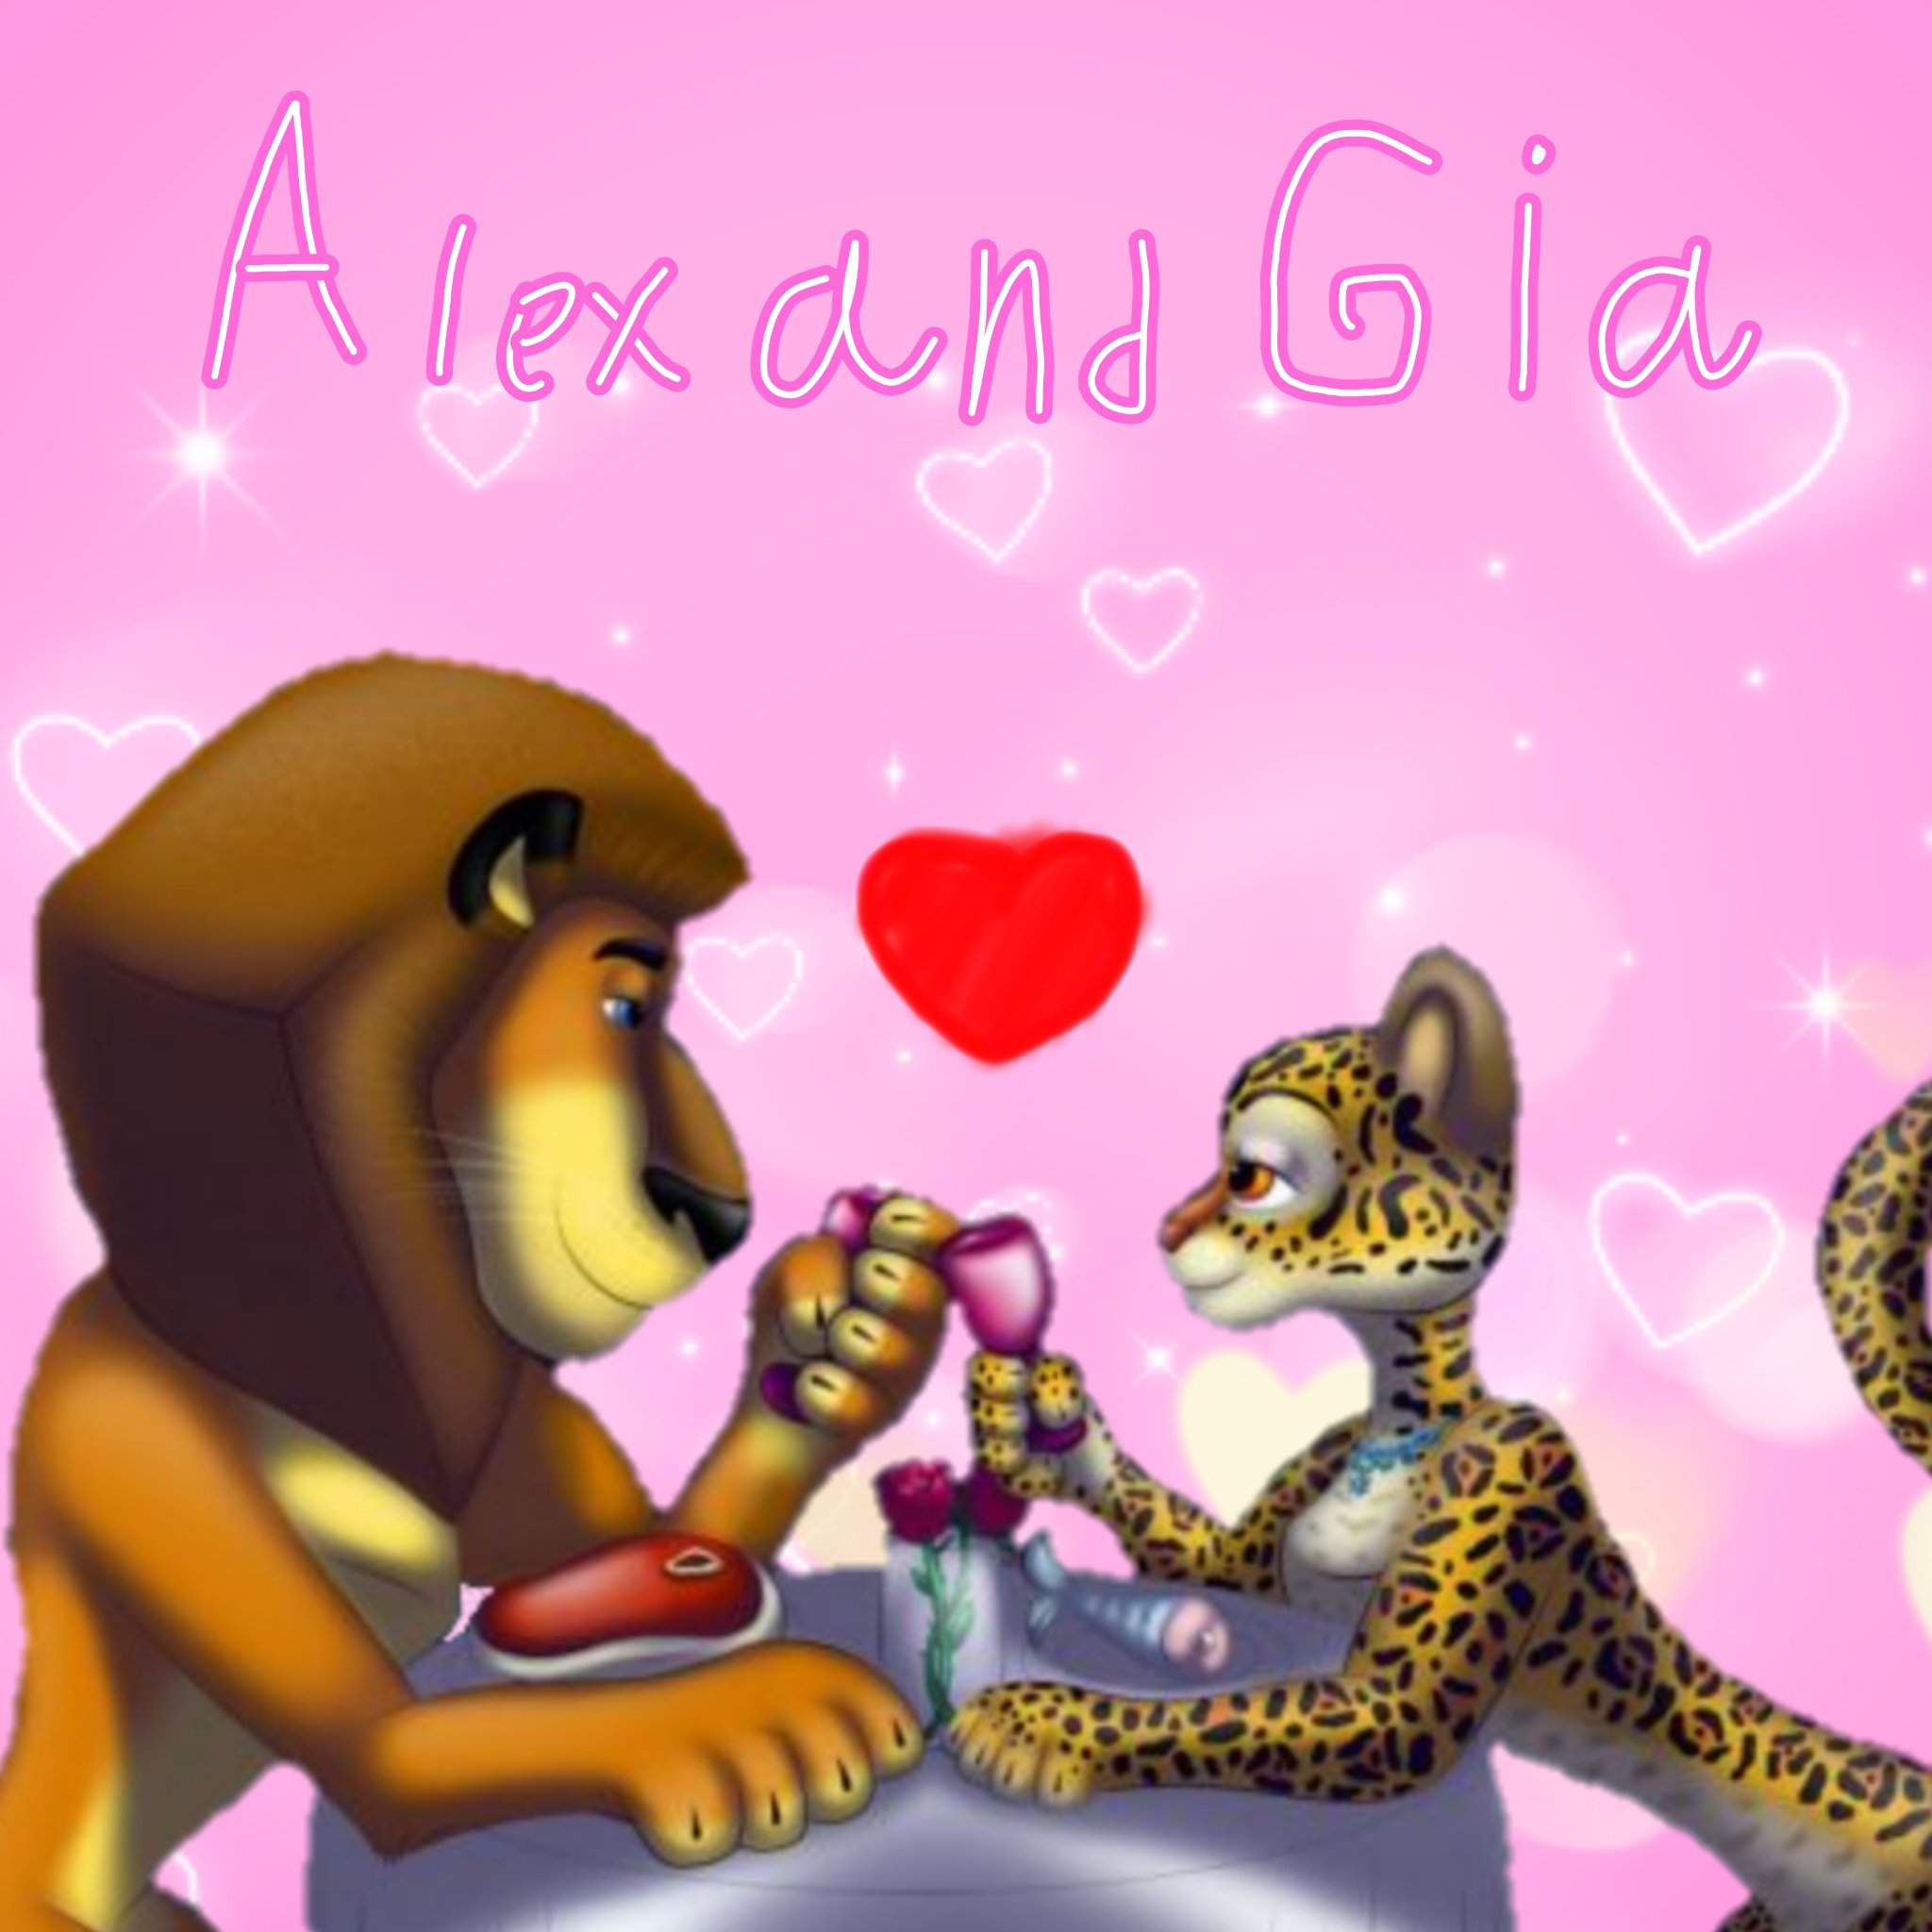 It's their romantic Wiki Madagascar Official Amino Amino 